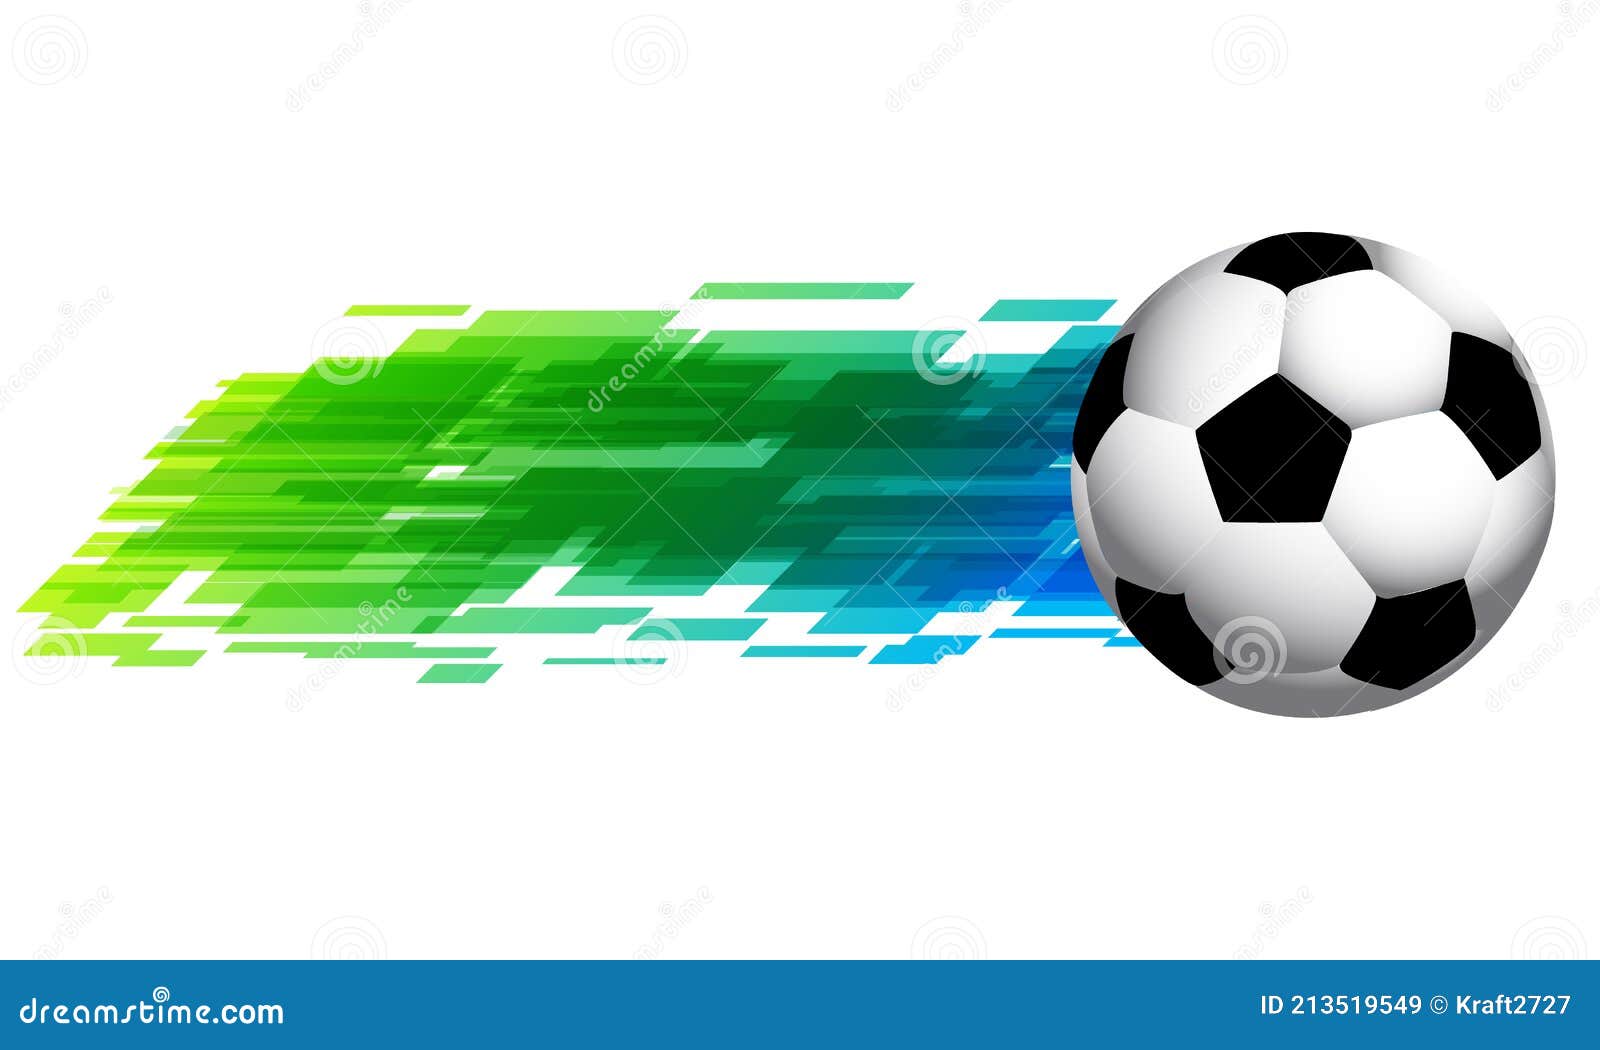 soccer ball on digitalized stripes background